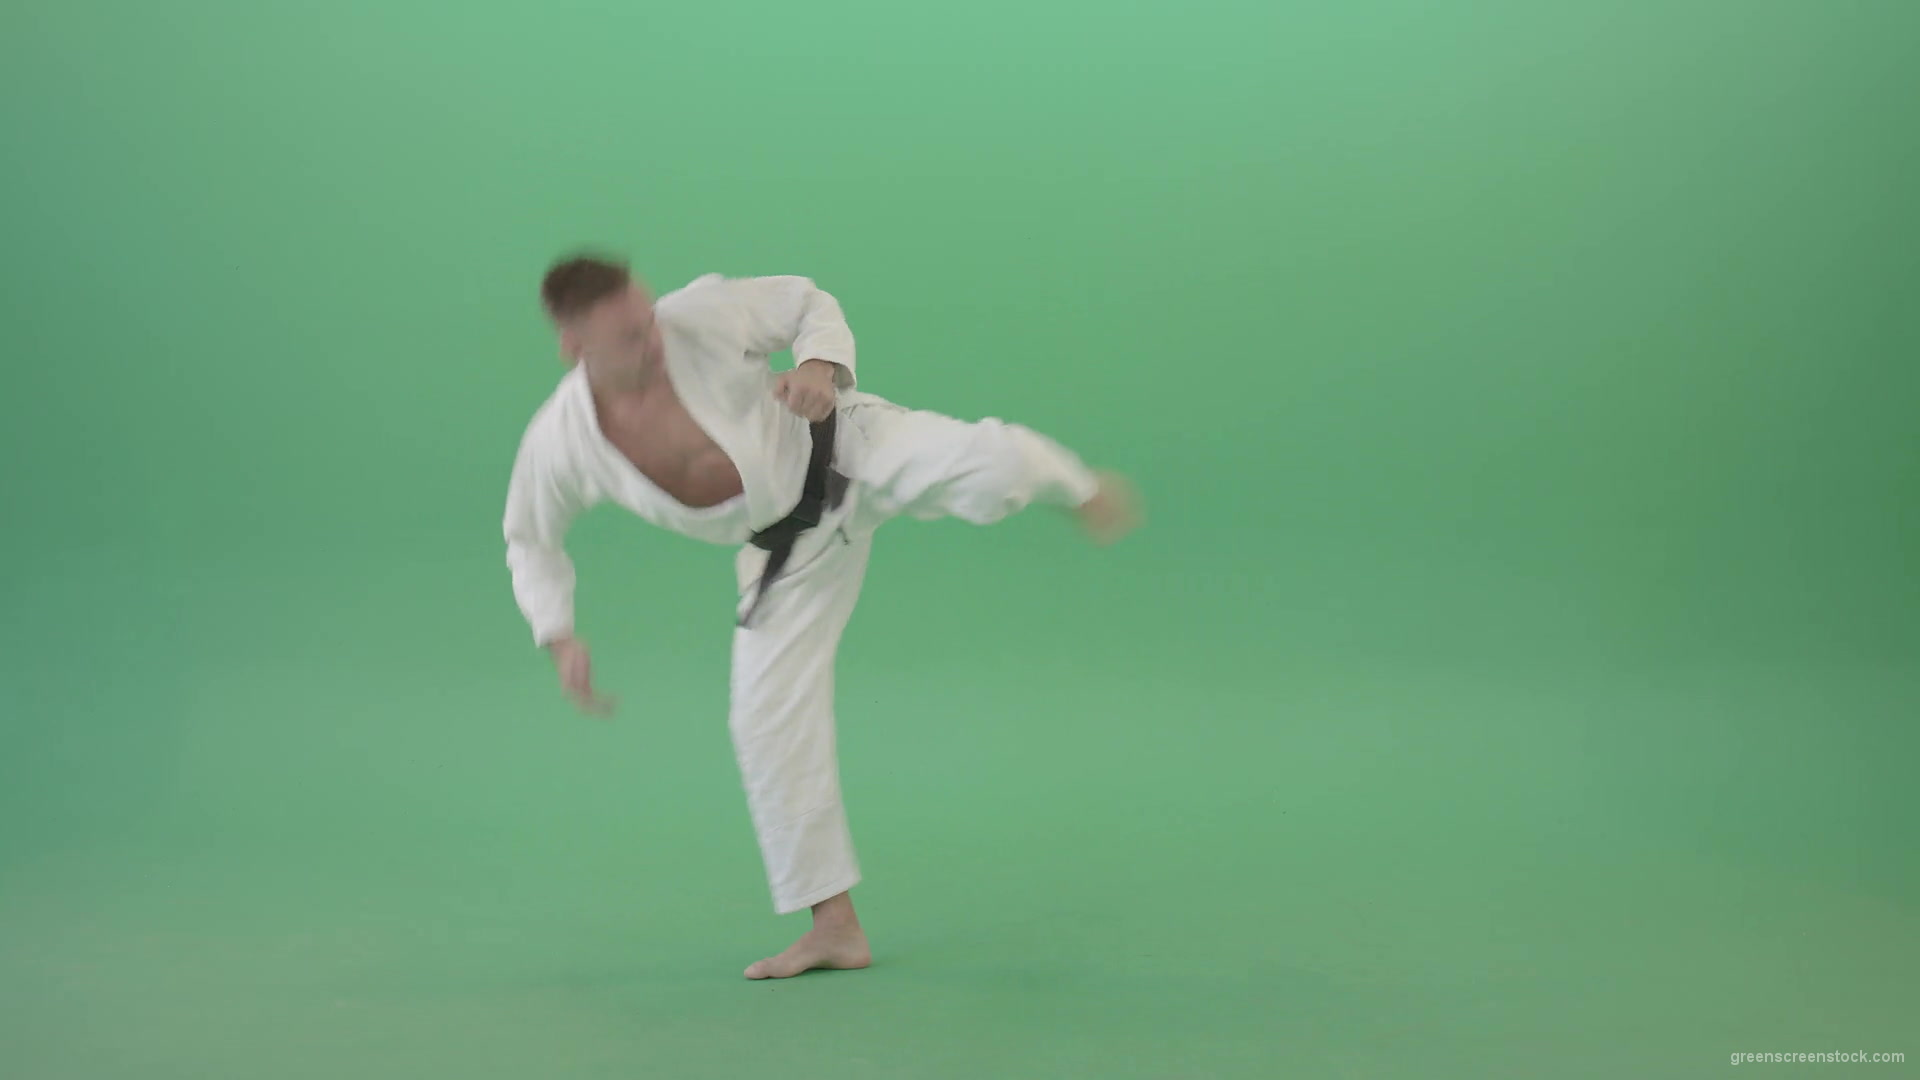 Ju-jutsu-young-man-training-slowly-karate-isolated-on-green-screen-4K-Video-Footage-1920_004 Green Screen Stock